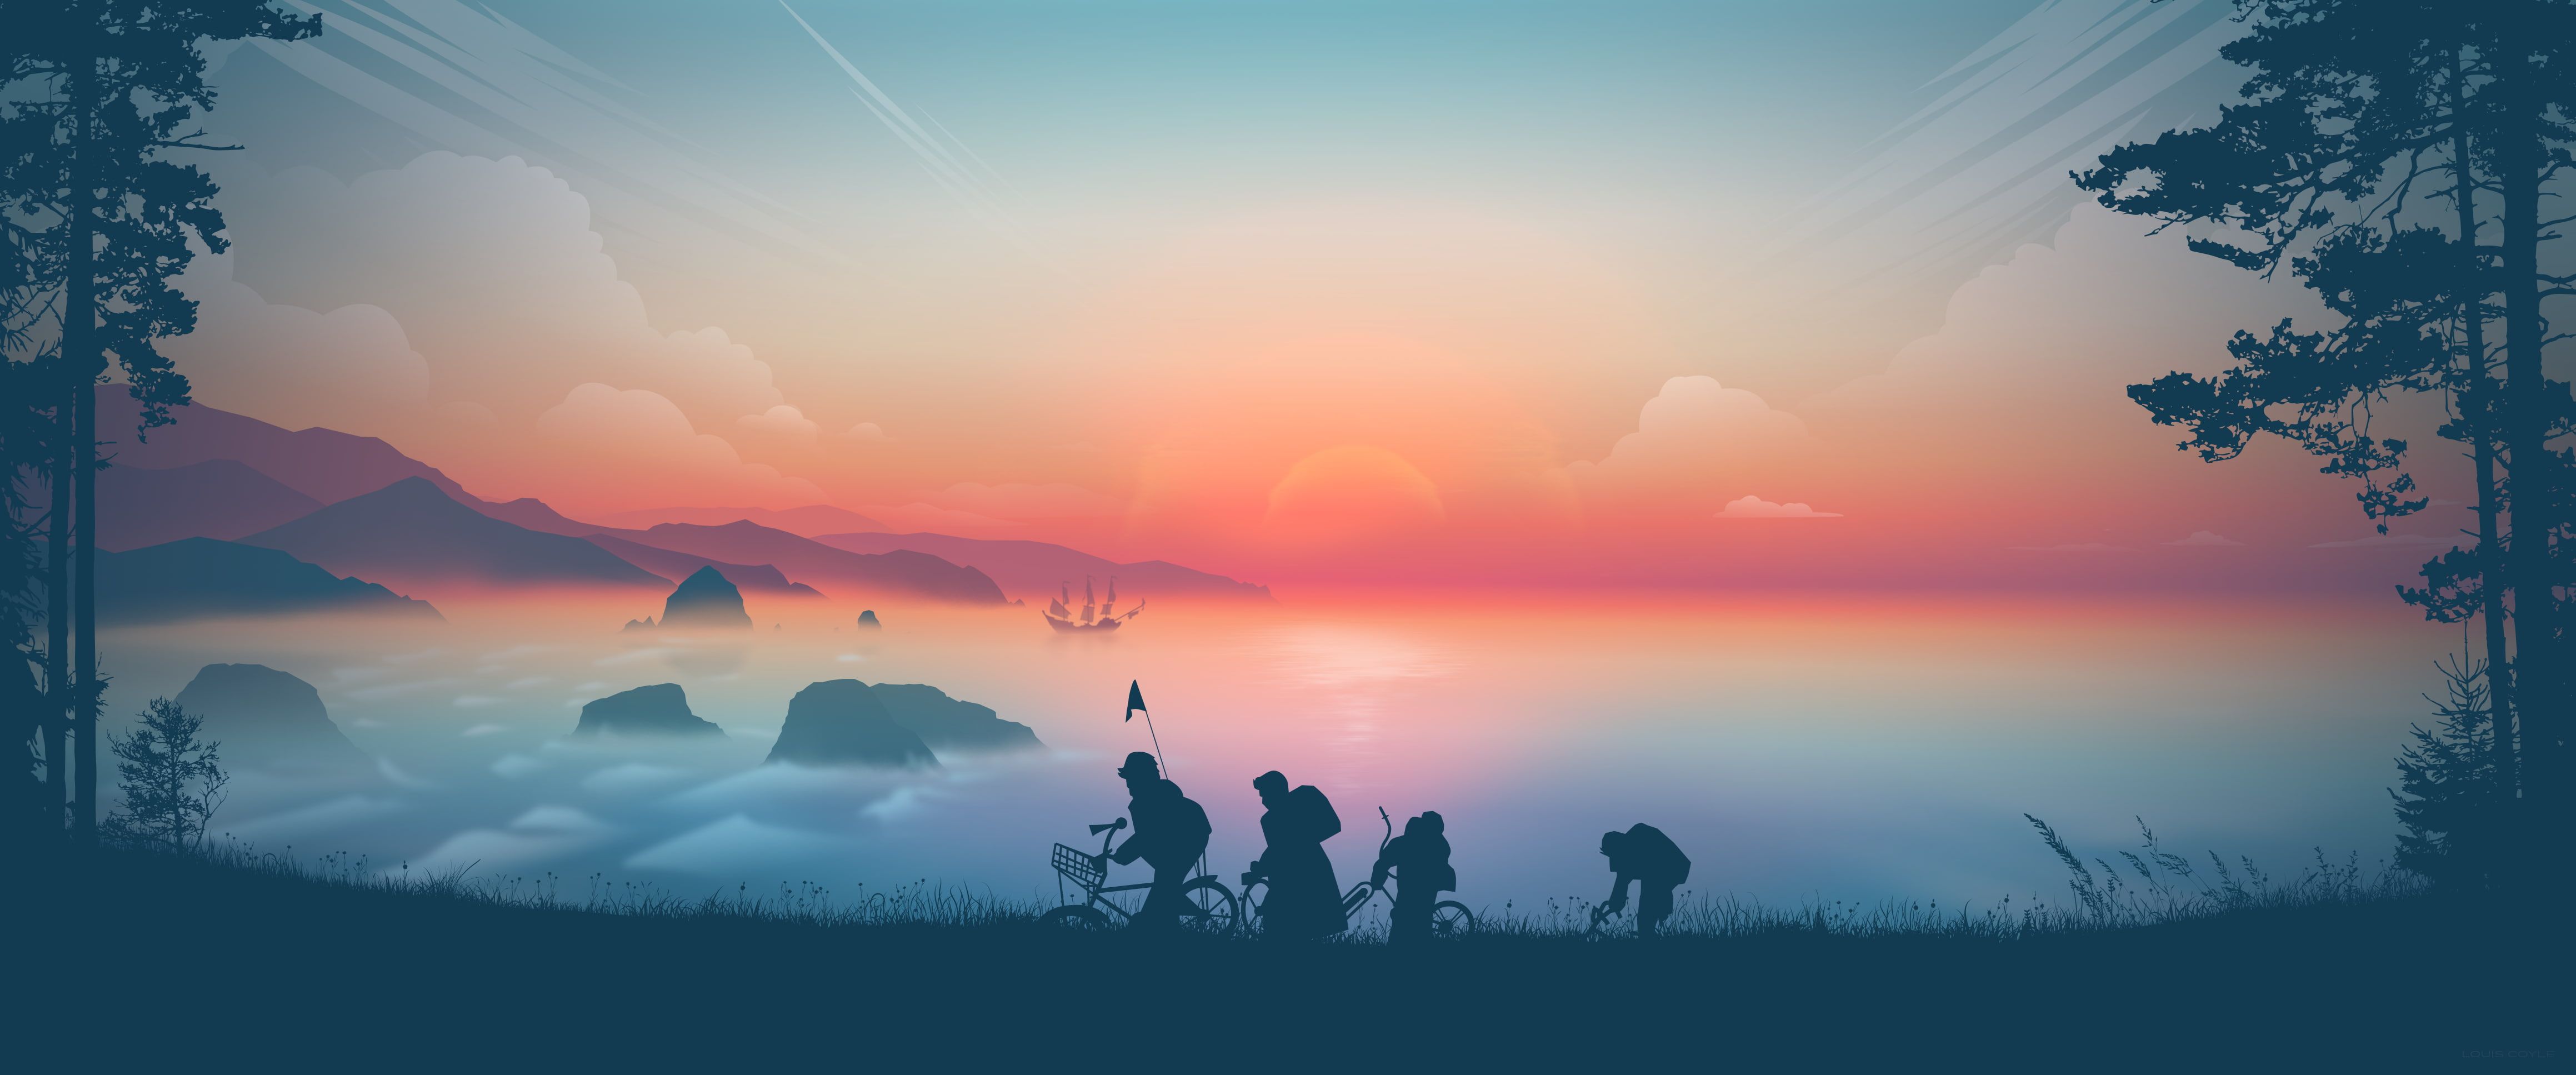 artwork digital art The Goonies #sunset #clouds #mist Pirate ship